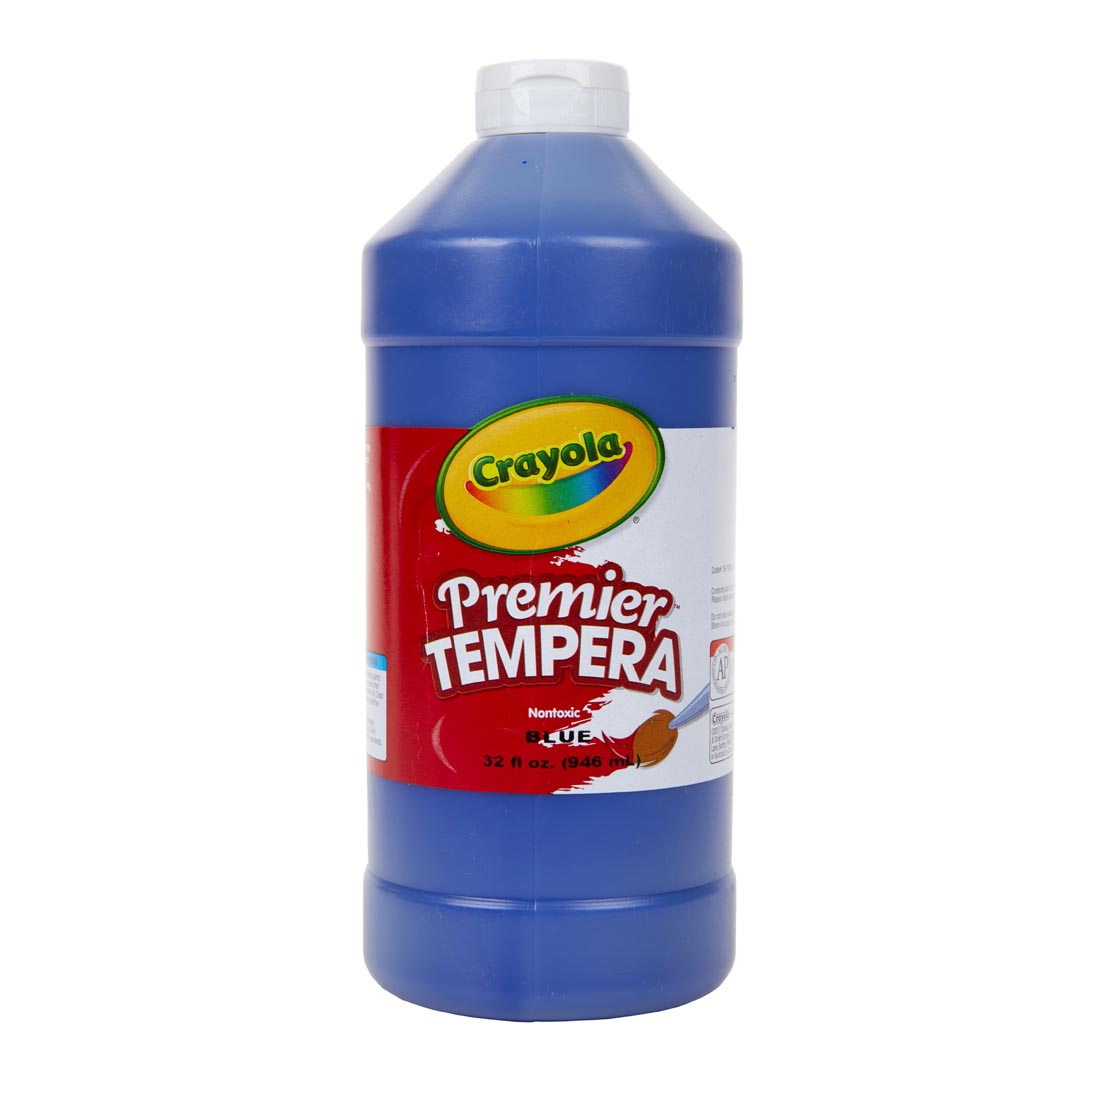 Bottle of Blue Crayola Premier Tempera Paint